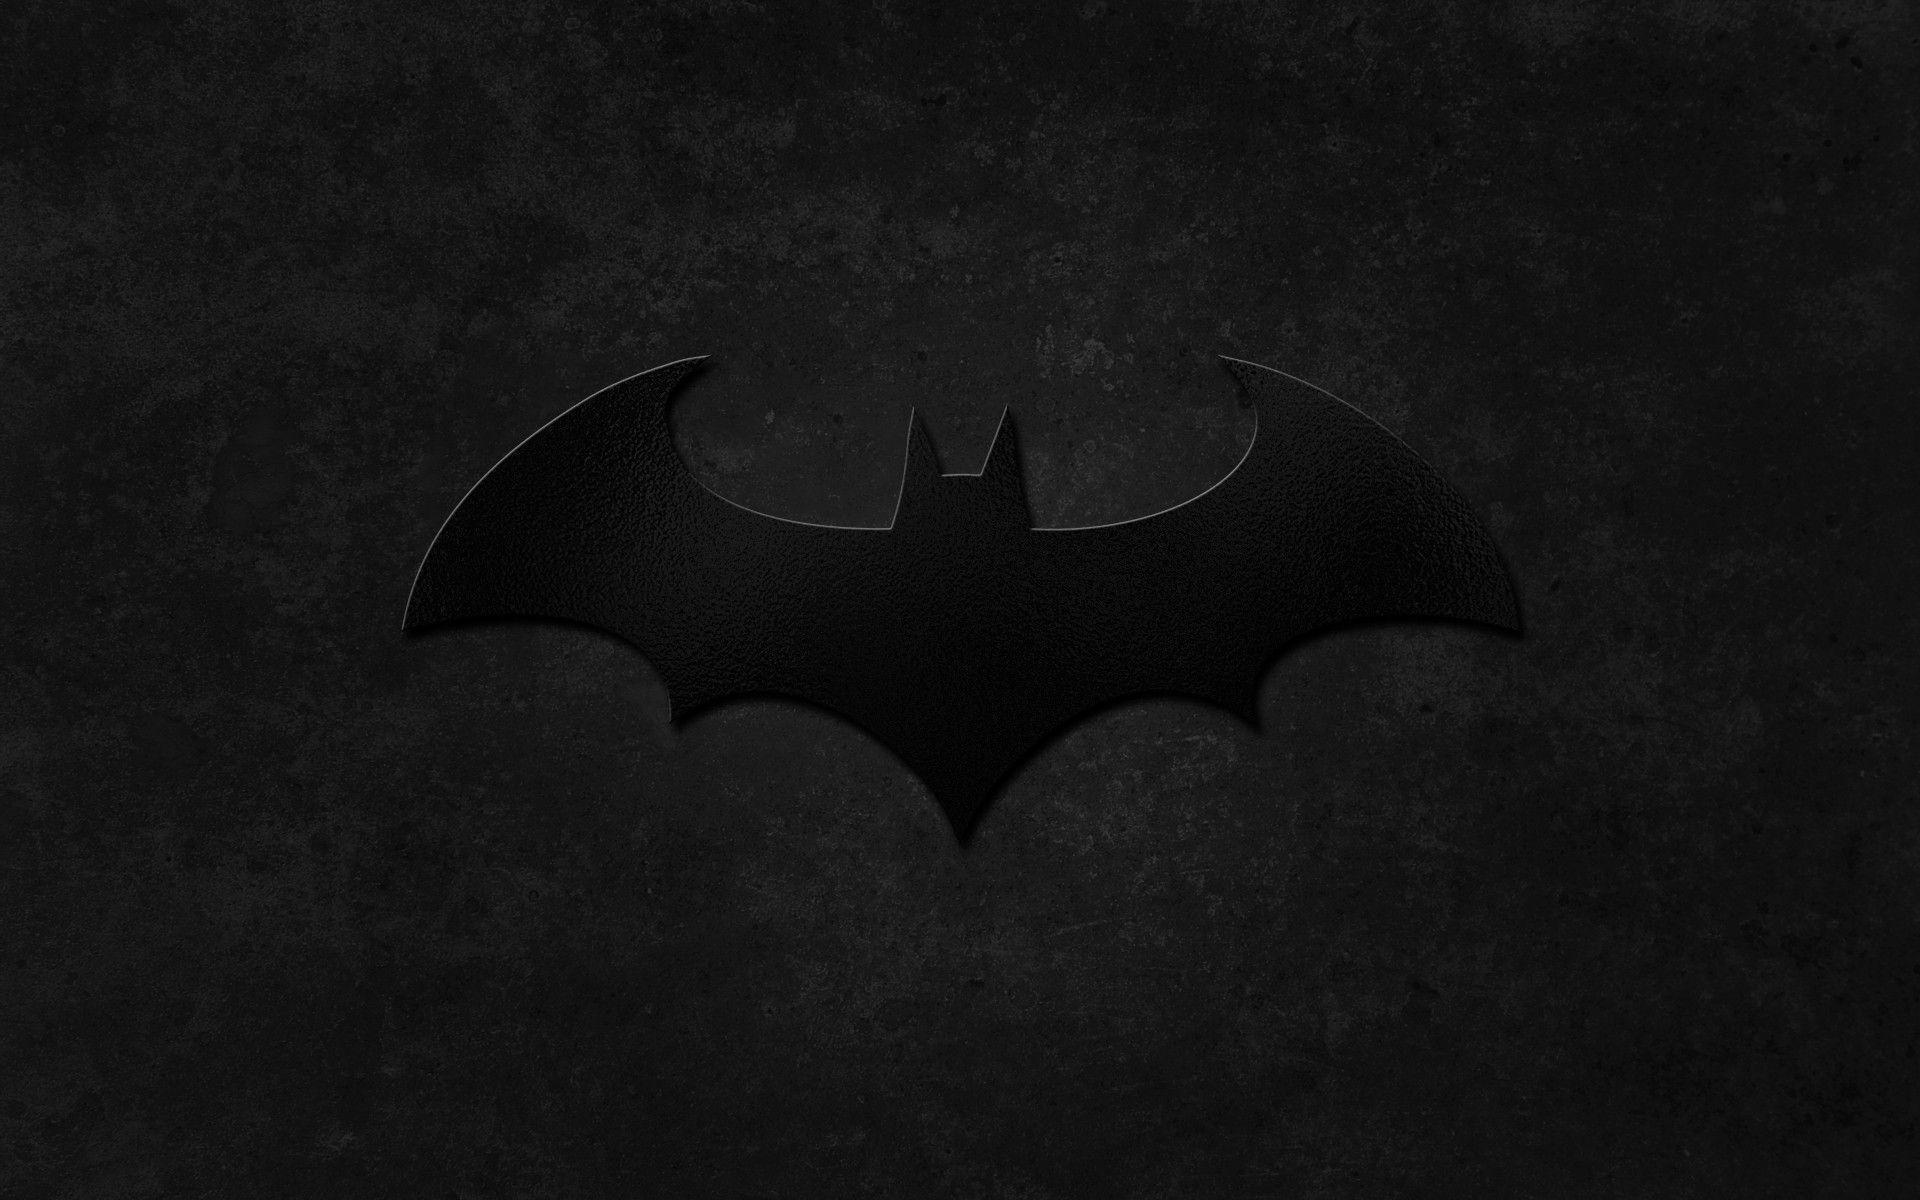 Batman Logo wallpaper